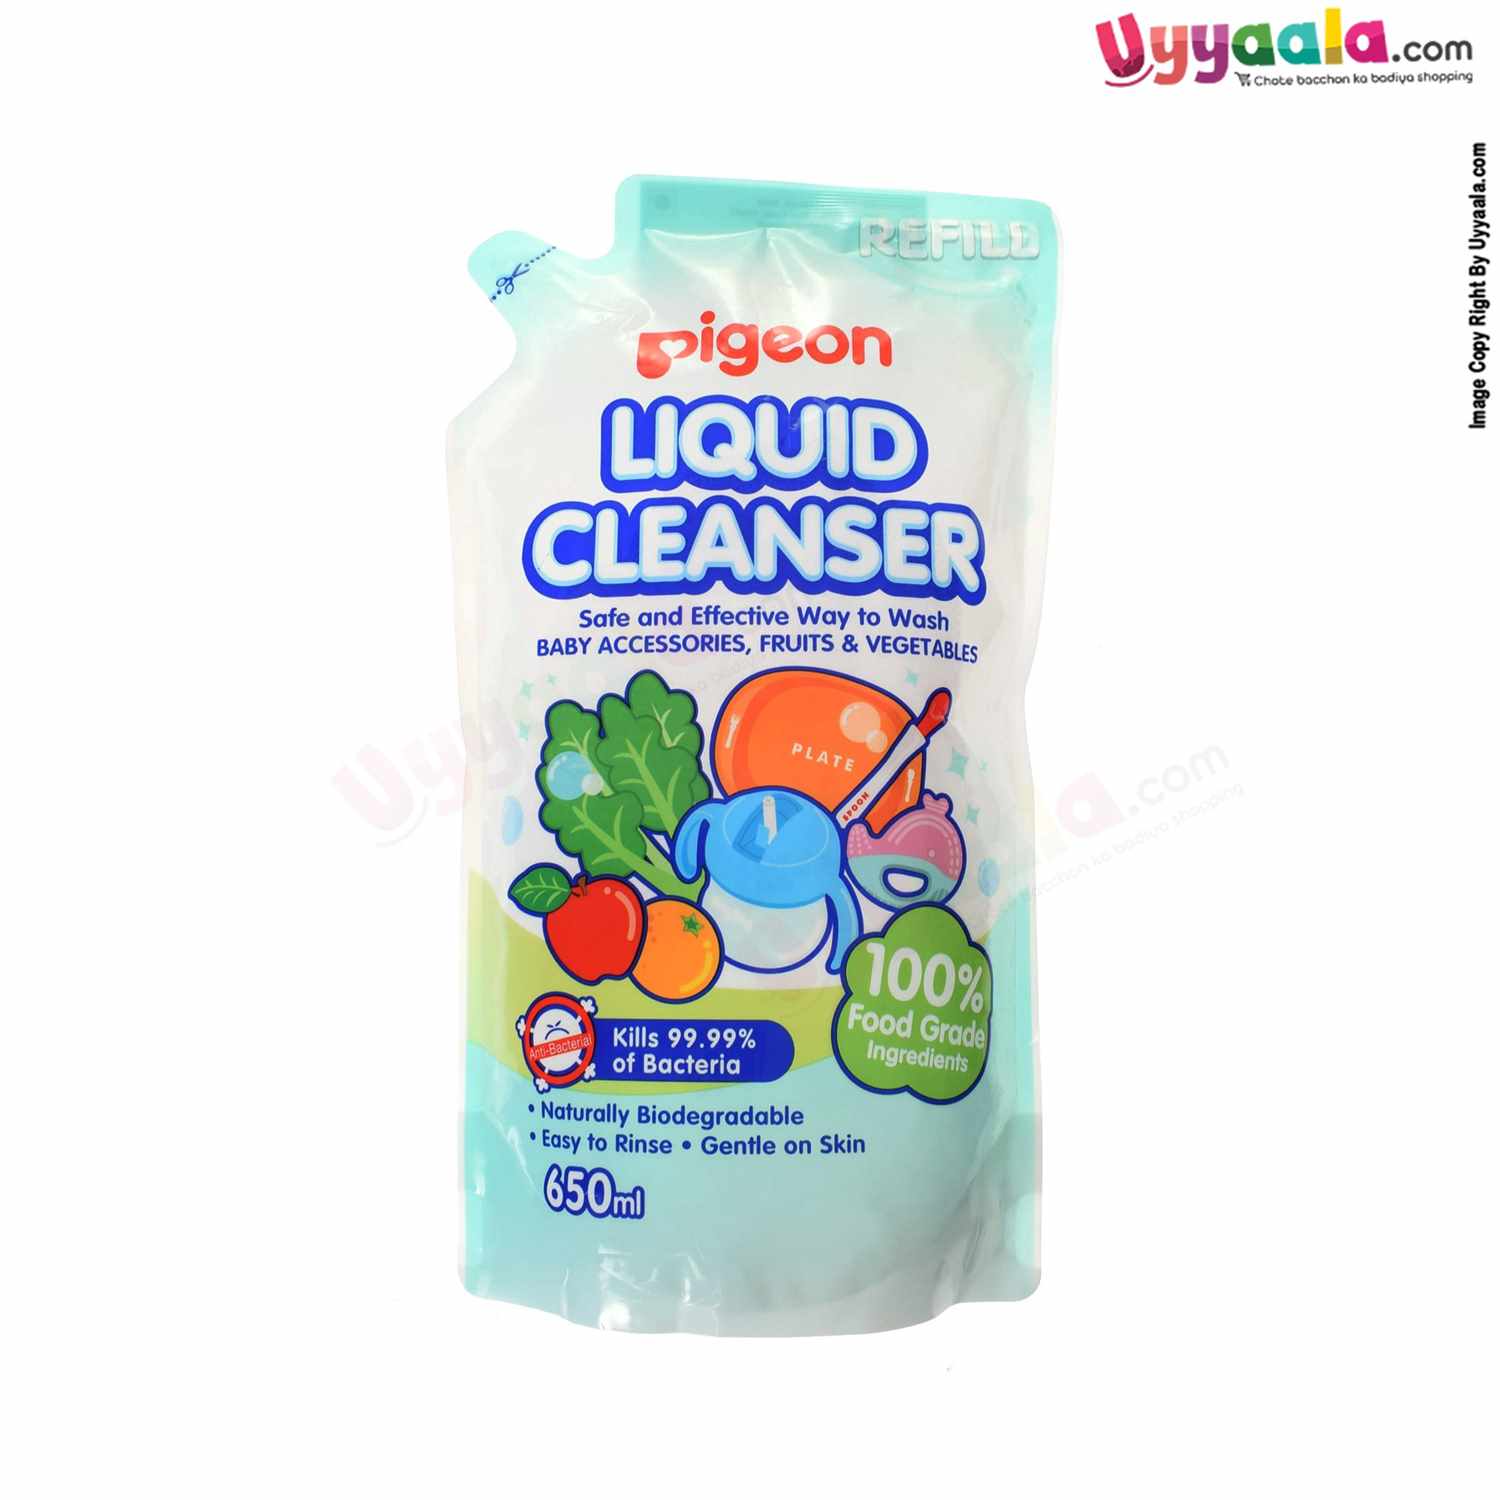 PIGEON Liquid Cleanser Anti-Bacterial Refill Pack - 650ml